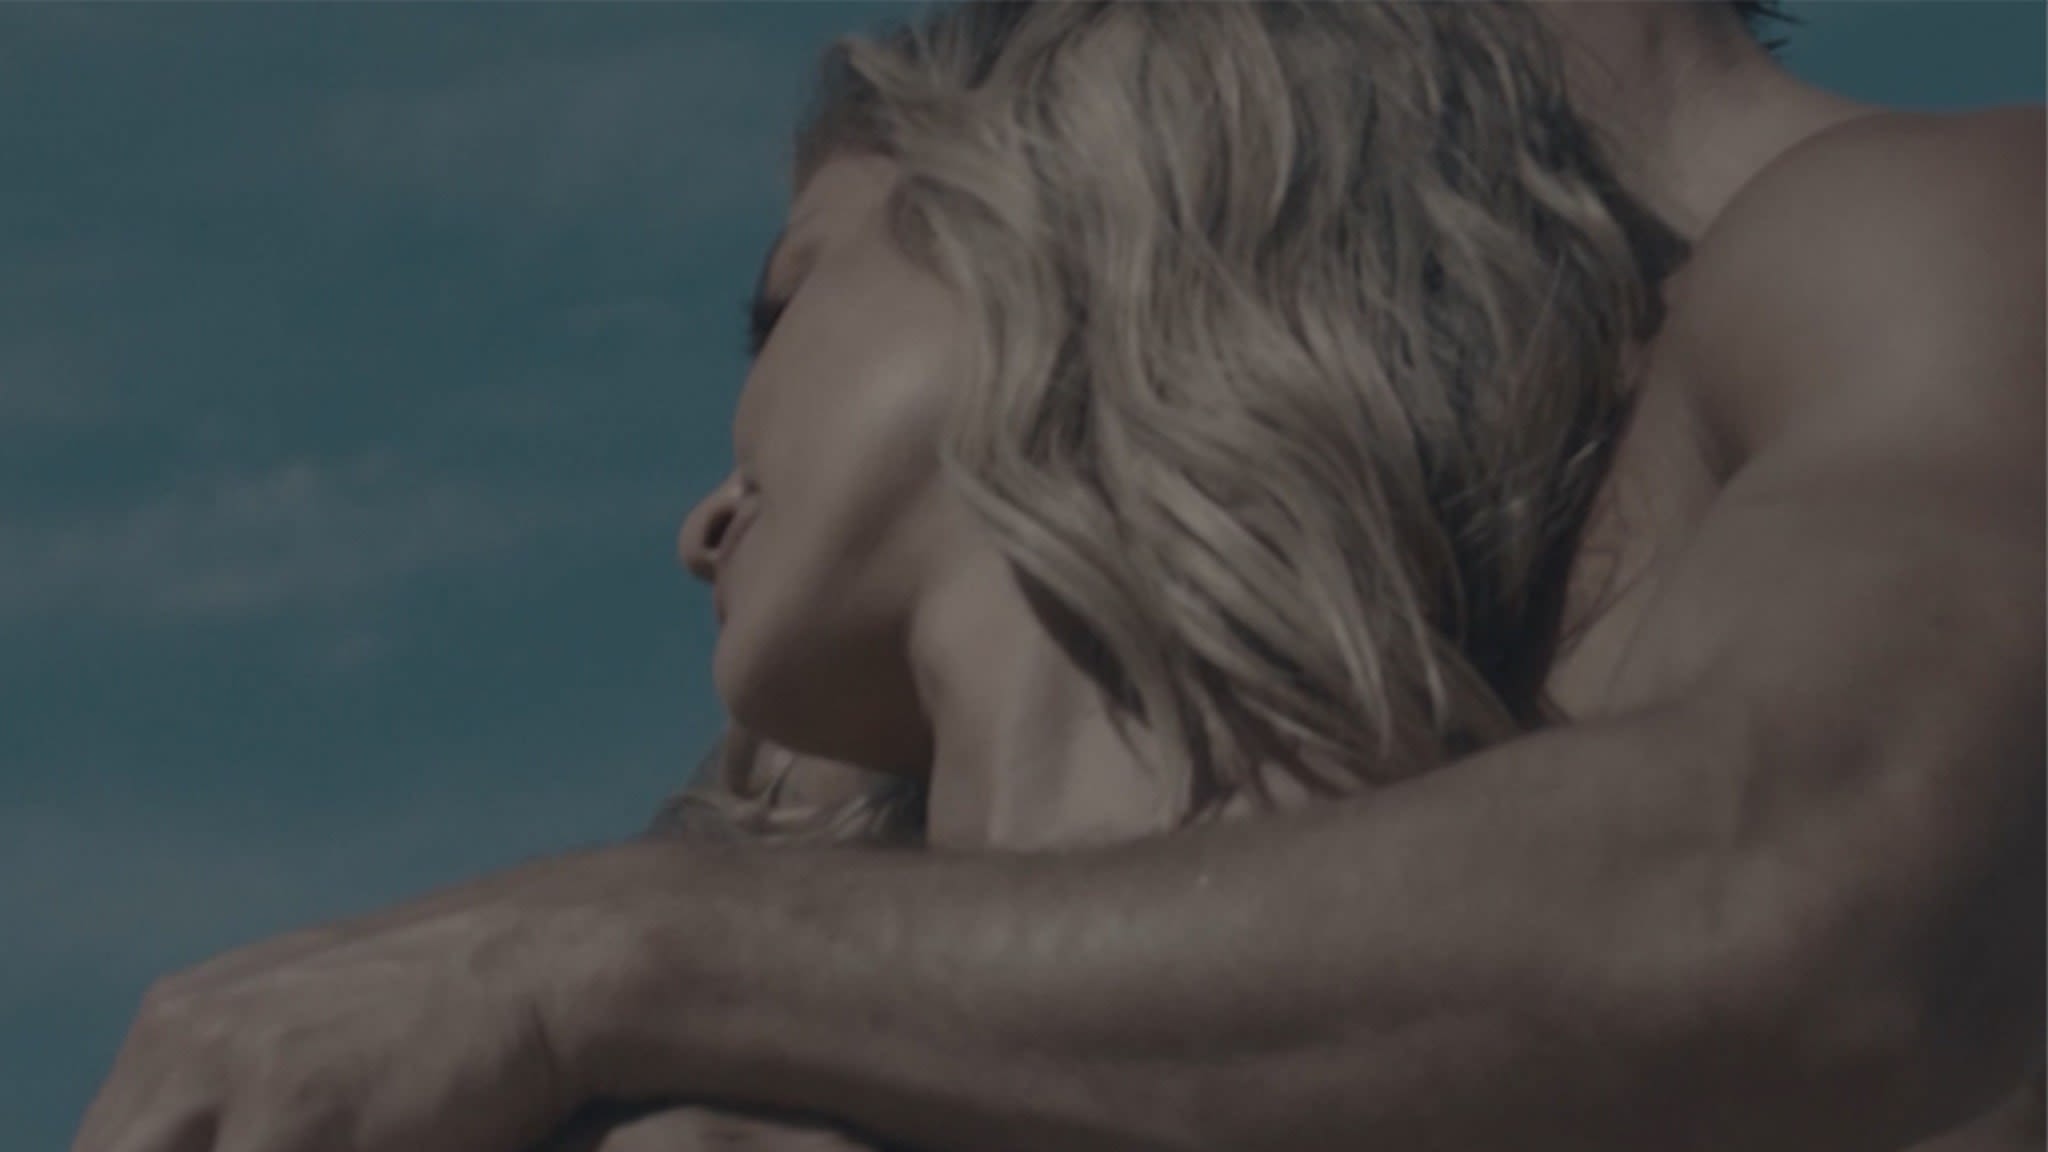 Kristin Cavallari Gets Hot & Heavy With BF Mark Estes For New Fragrance Ad